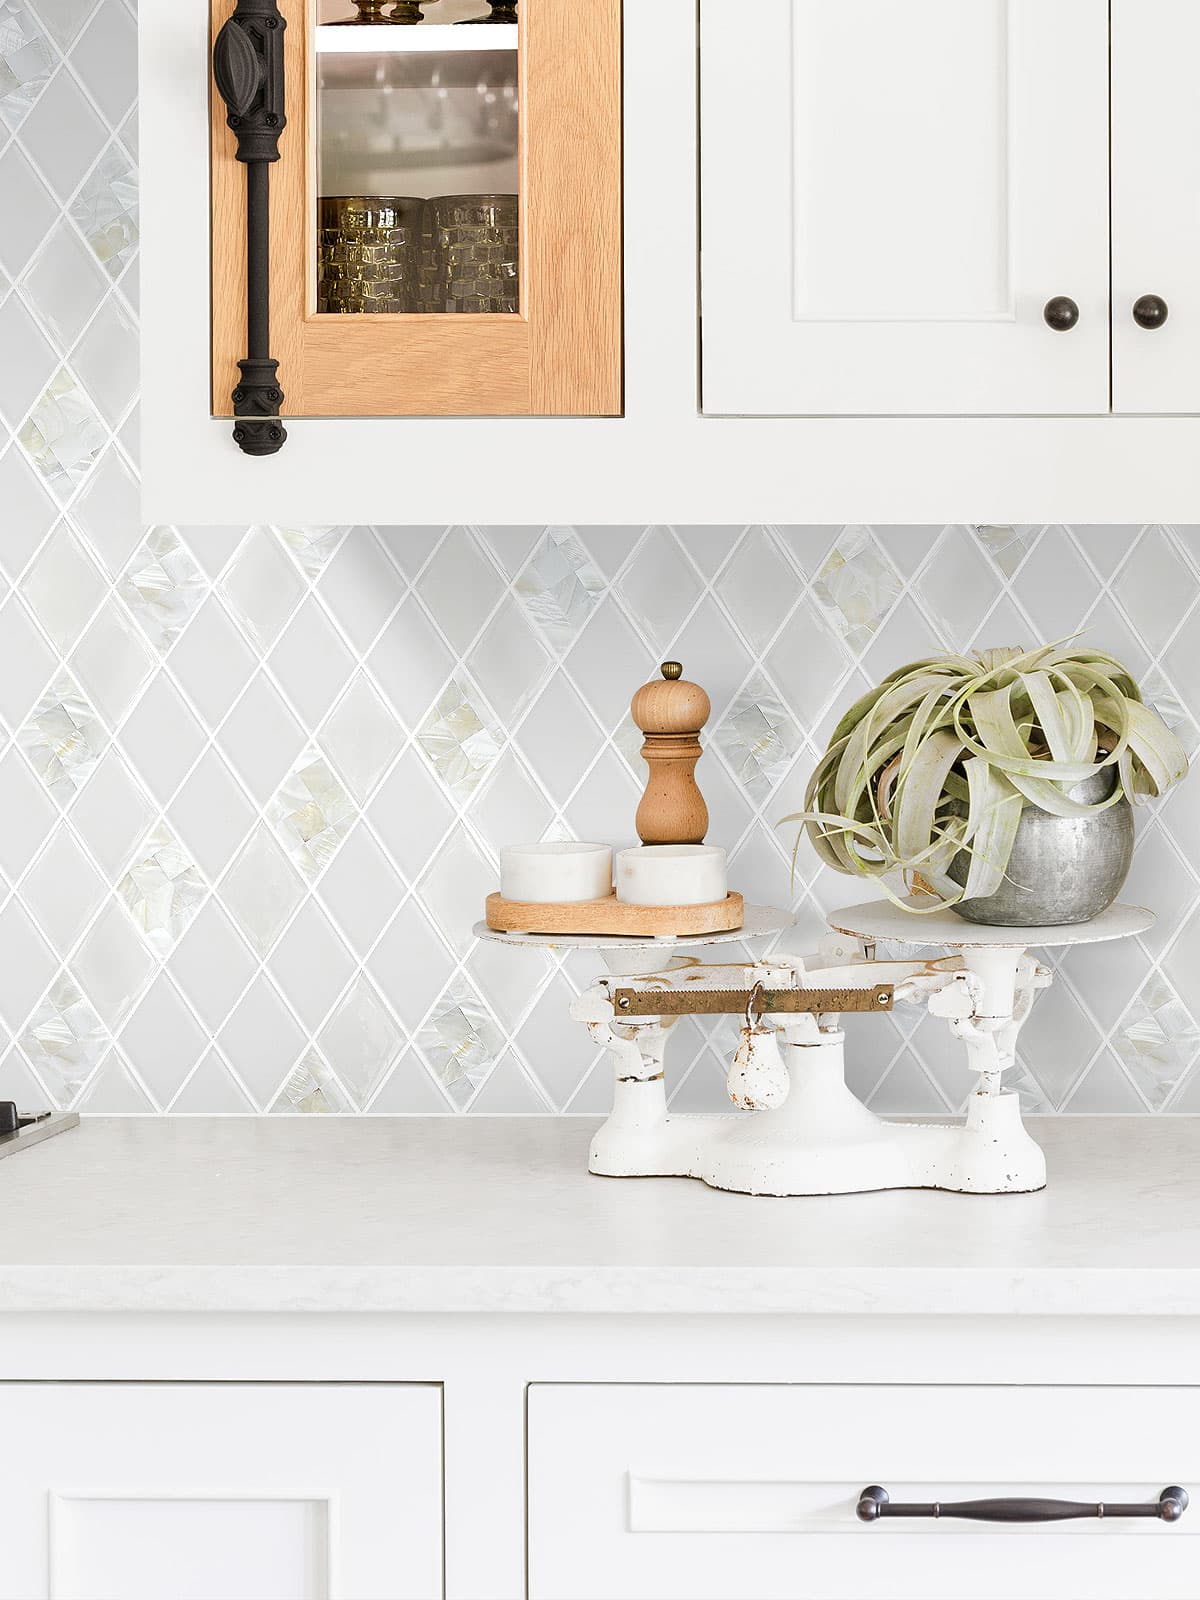 Full White Kitchen Cabinet Countertop Glass Shell Backsplash Tile BA6706